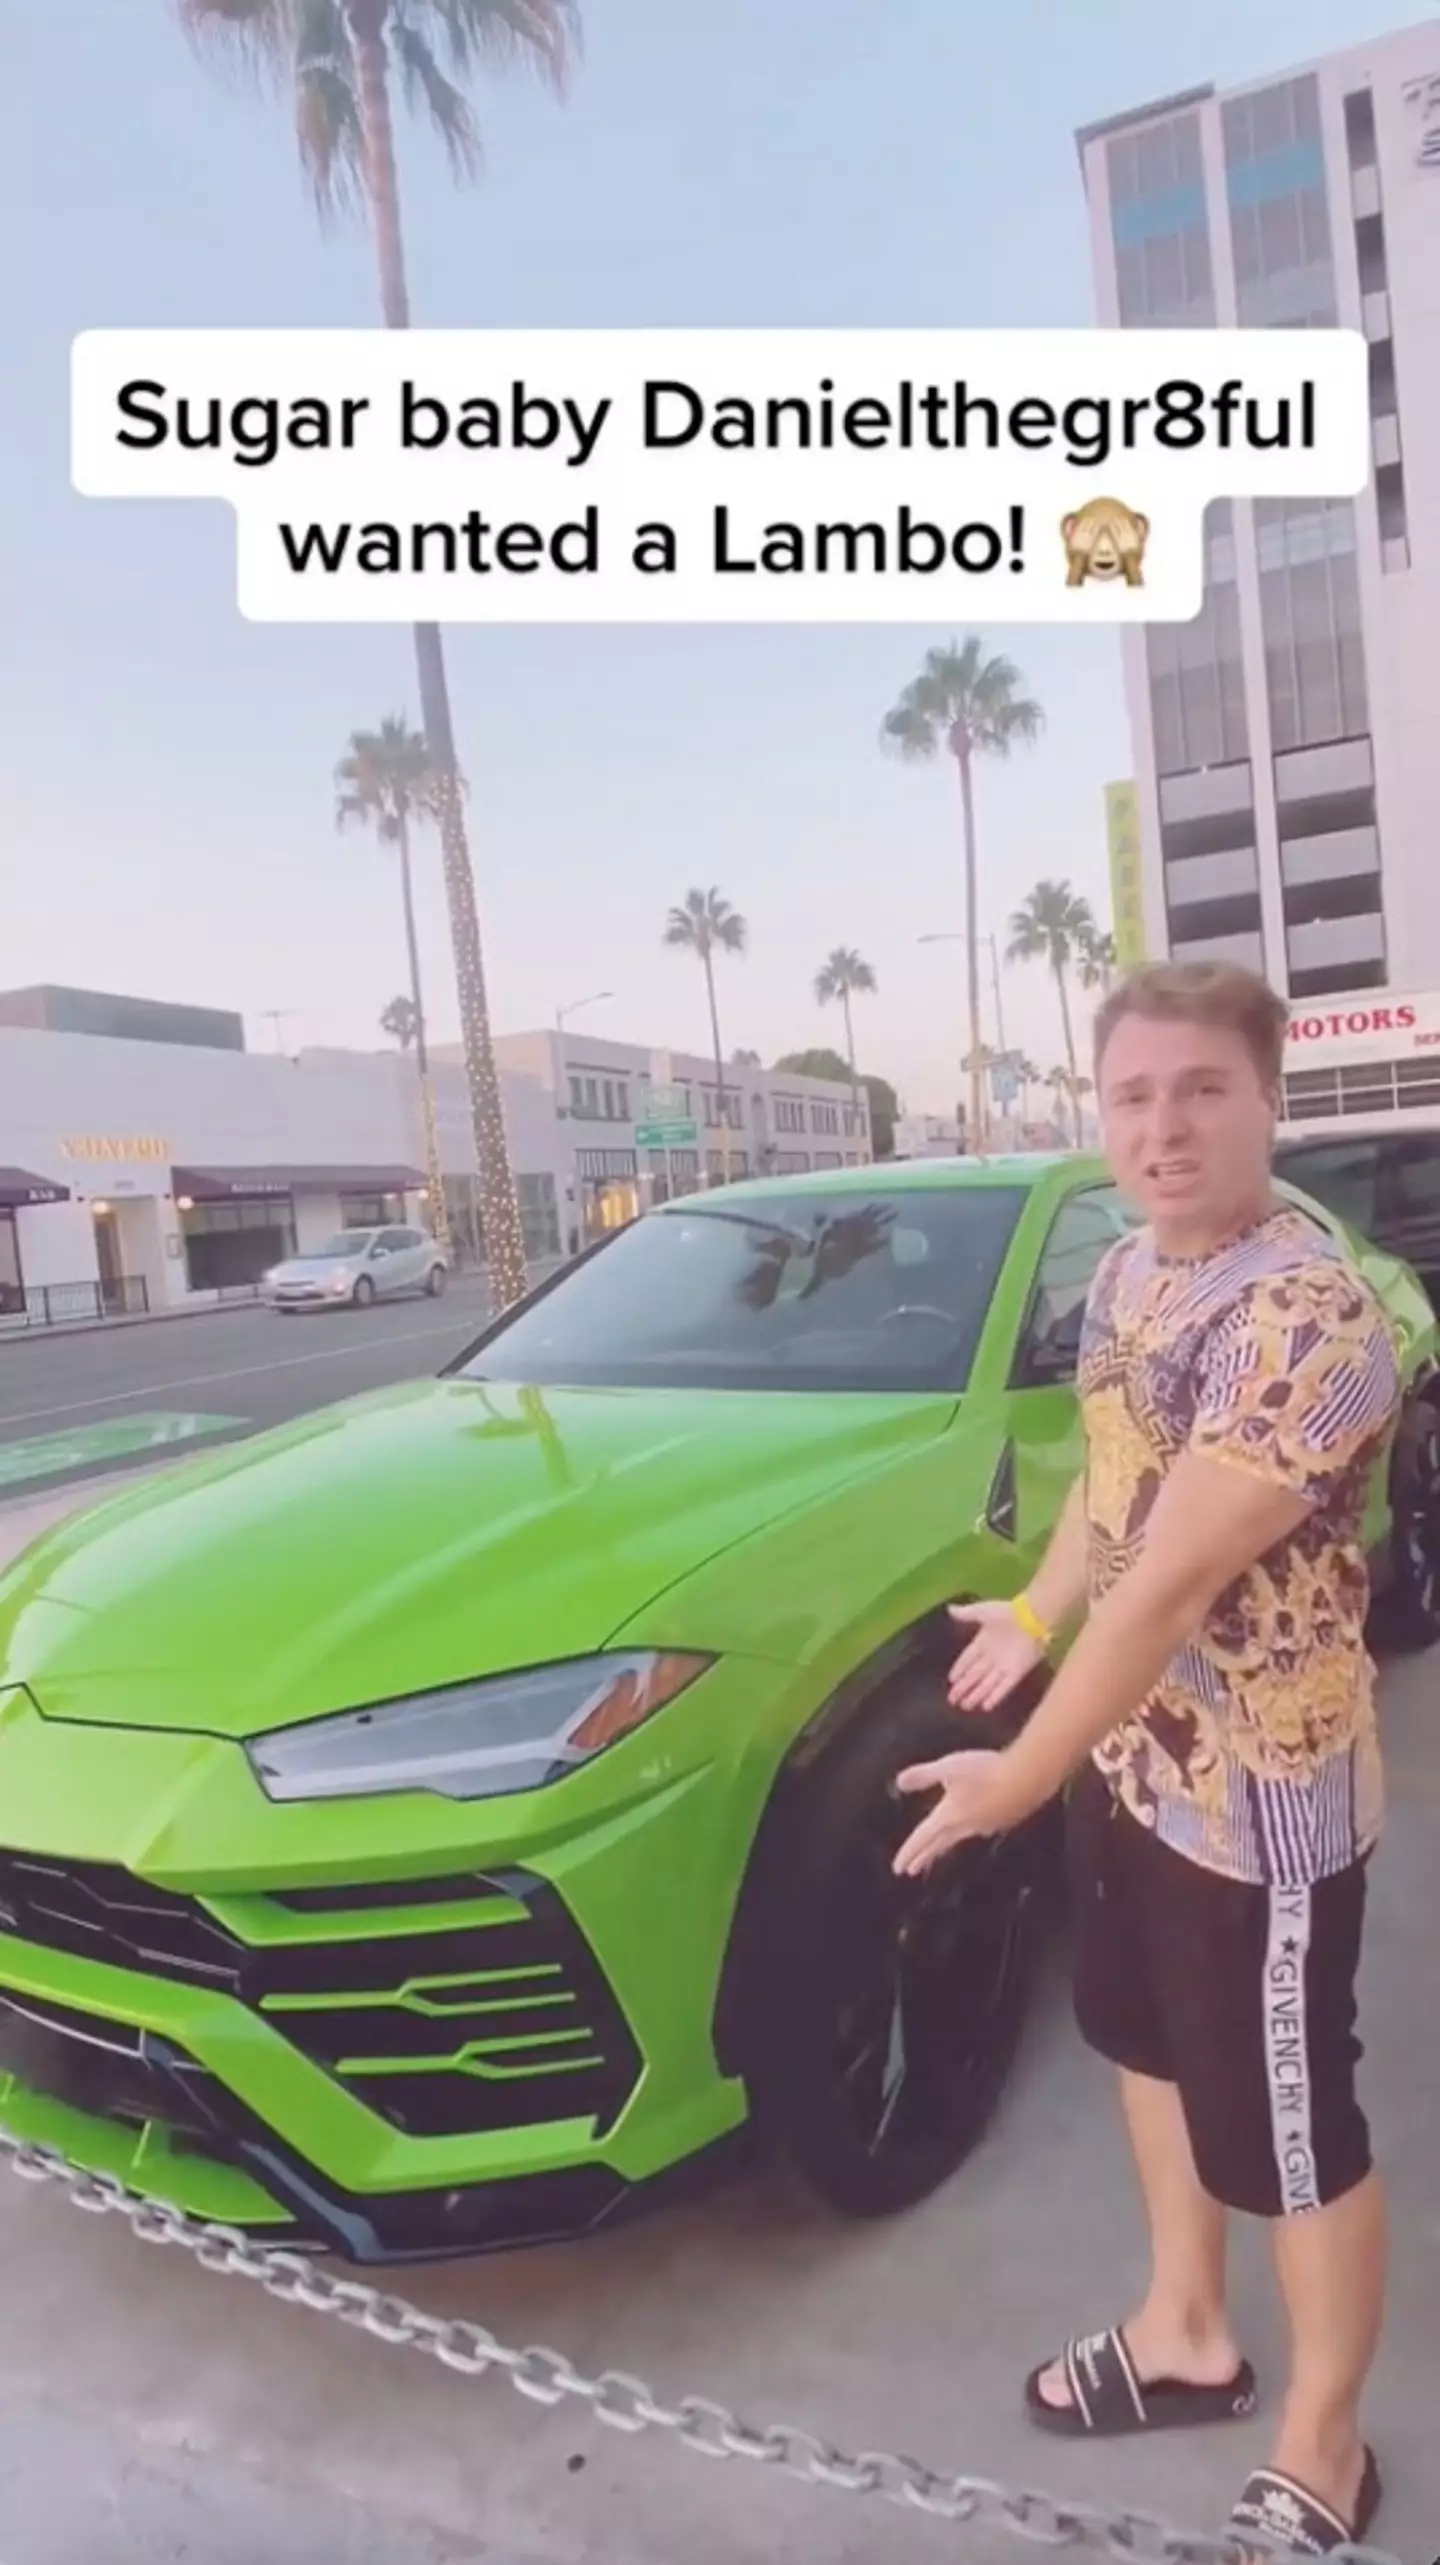 A recent shopping trip saw boyfriend Daniel request a Lamborghini car.